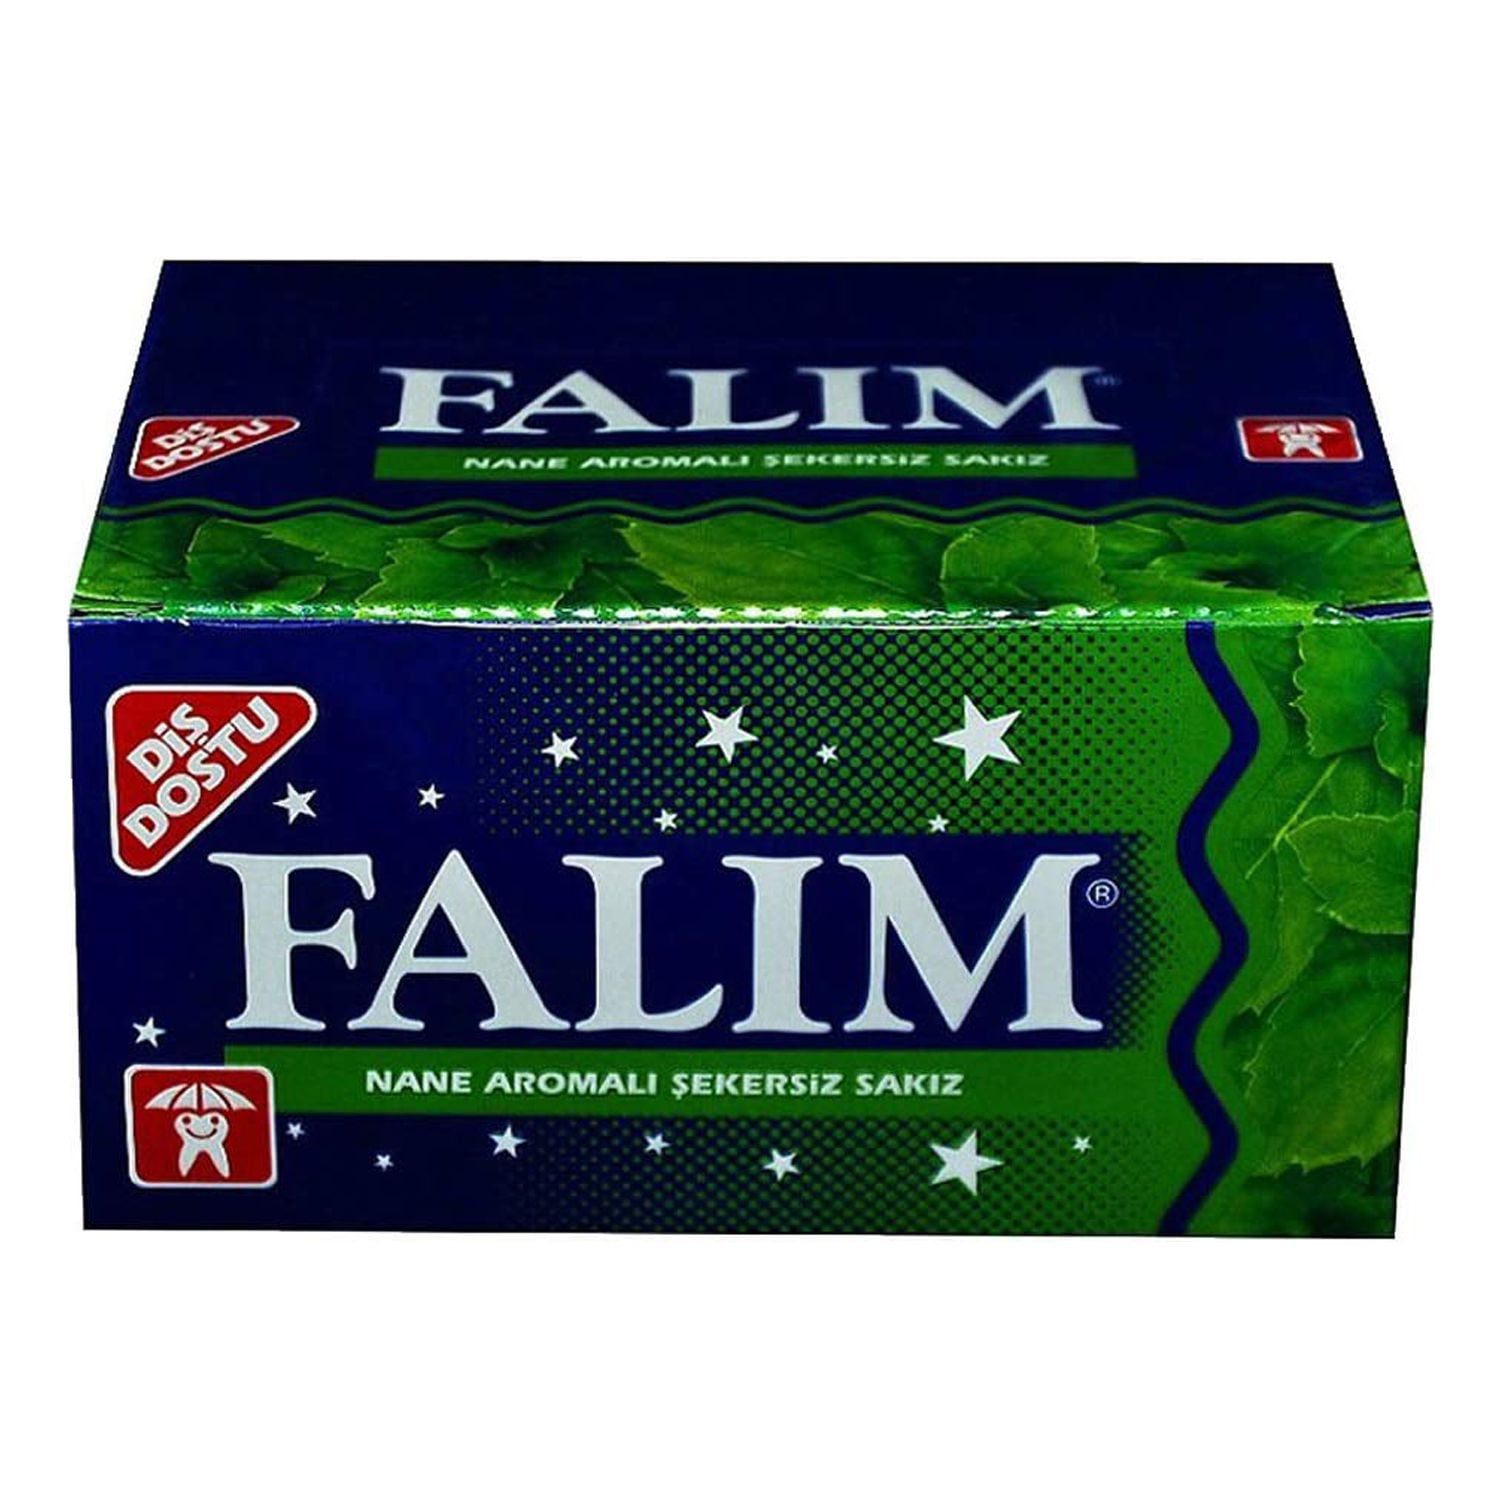 Falim Gum Chew Mint Flavour Sugar Free (20 x 5pcs/140g